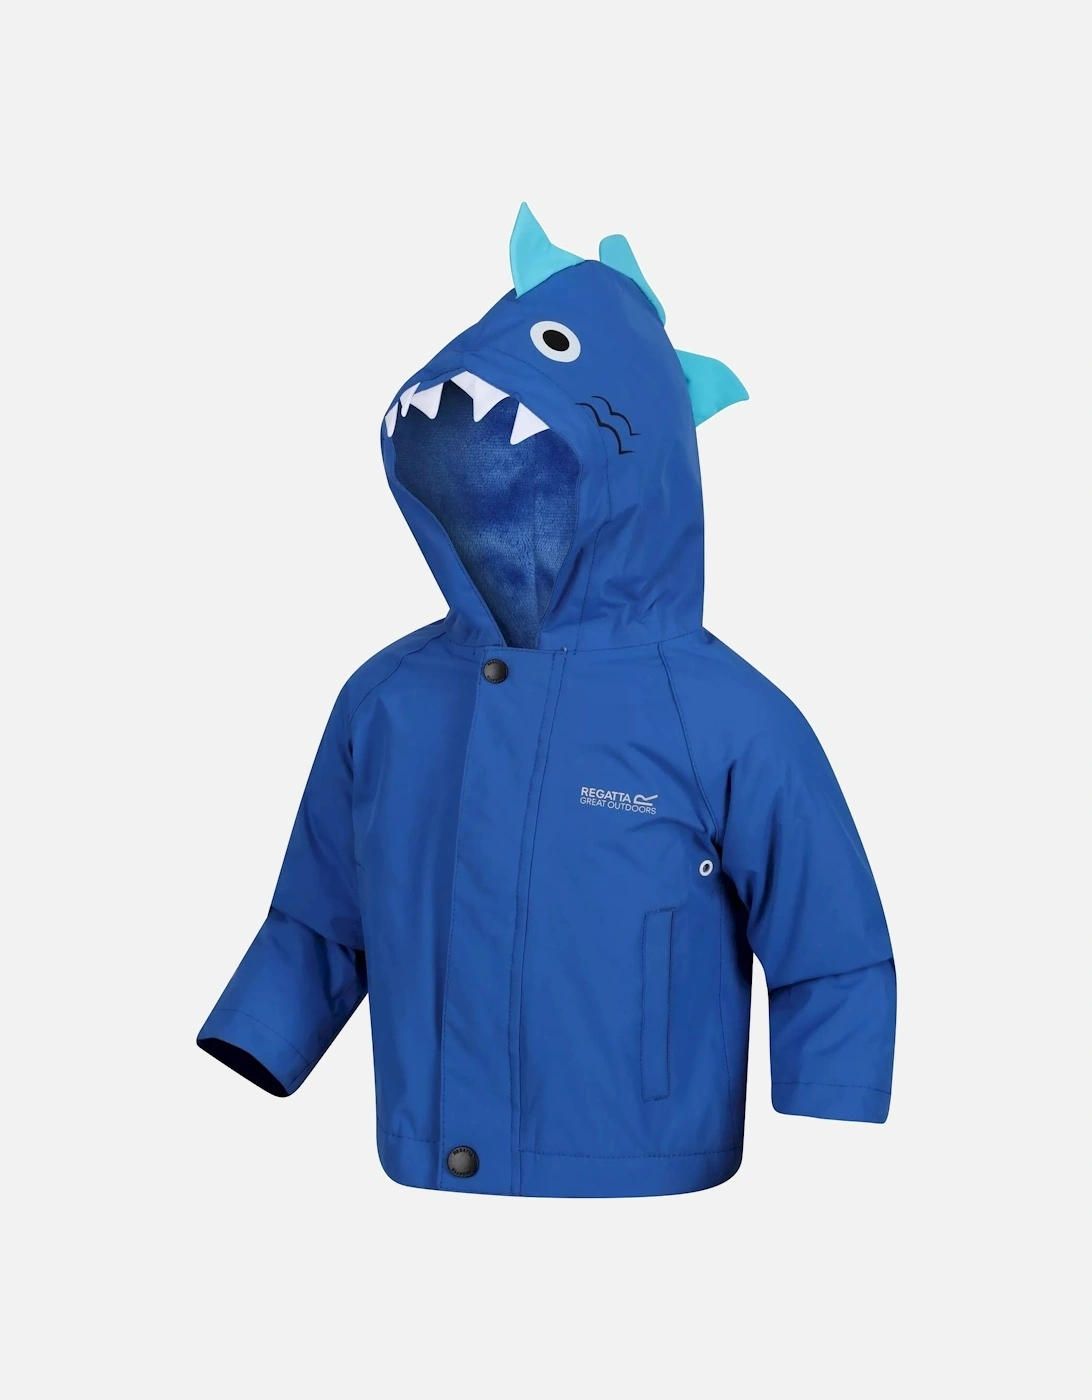 Childrens/Kids Shark Waterproof Jacket